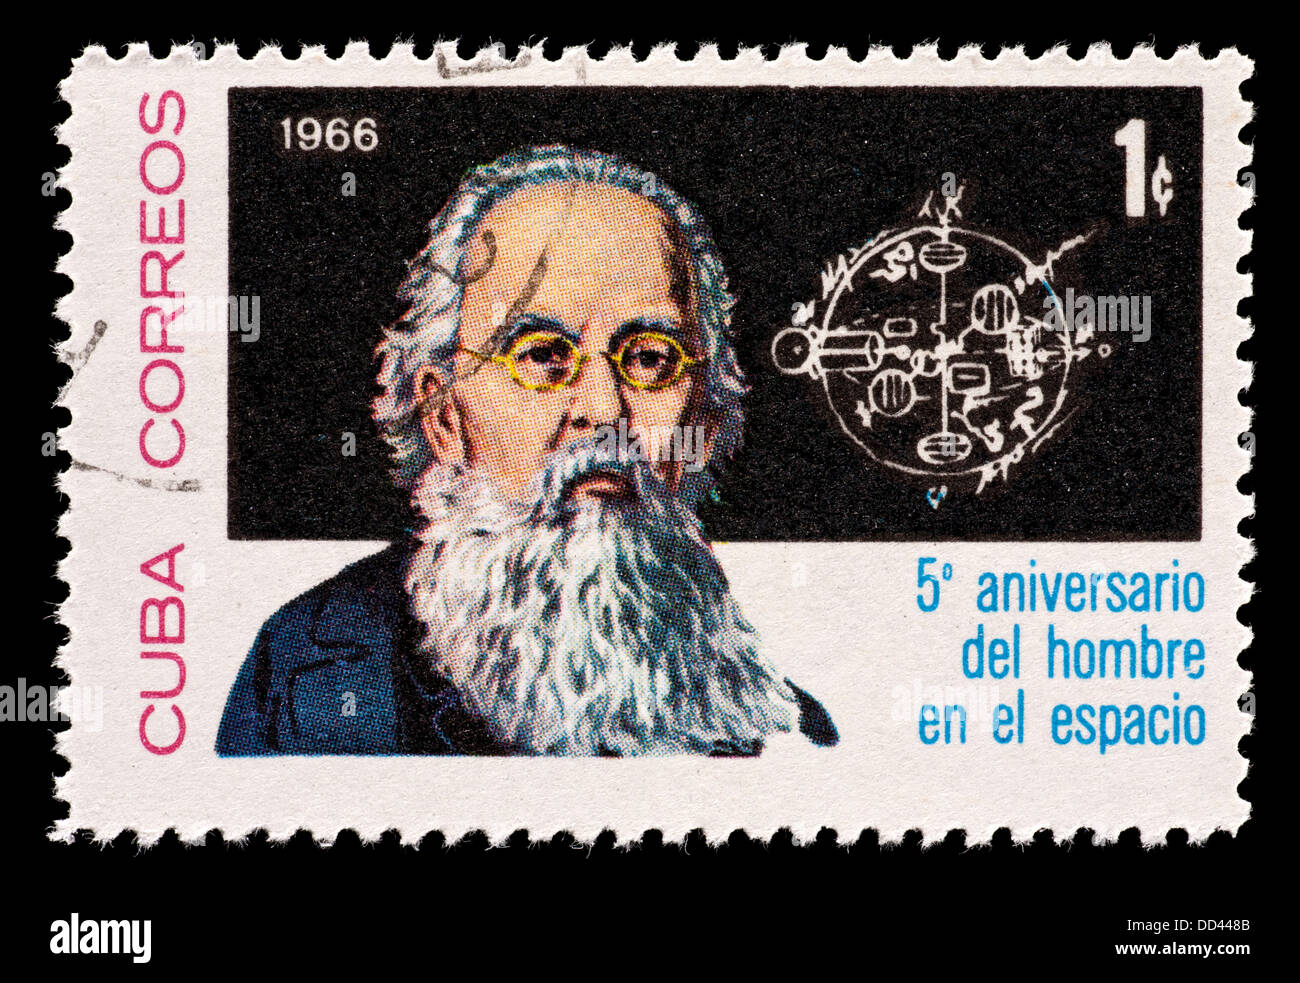 Postage stamp from Cuba depicting Konstantin Eduardovich Tsiolkovsky, Soviet rocket and space sciences scientist. Stock Photo